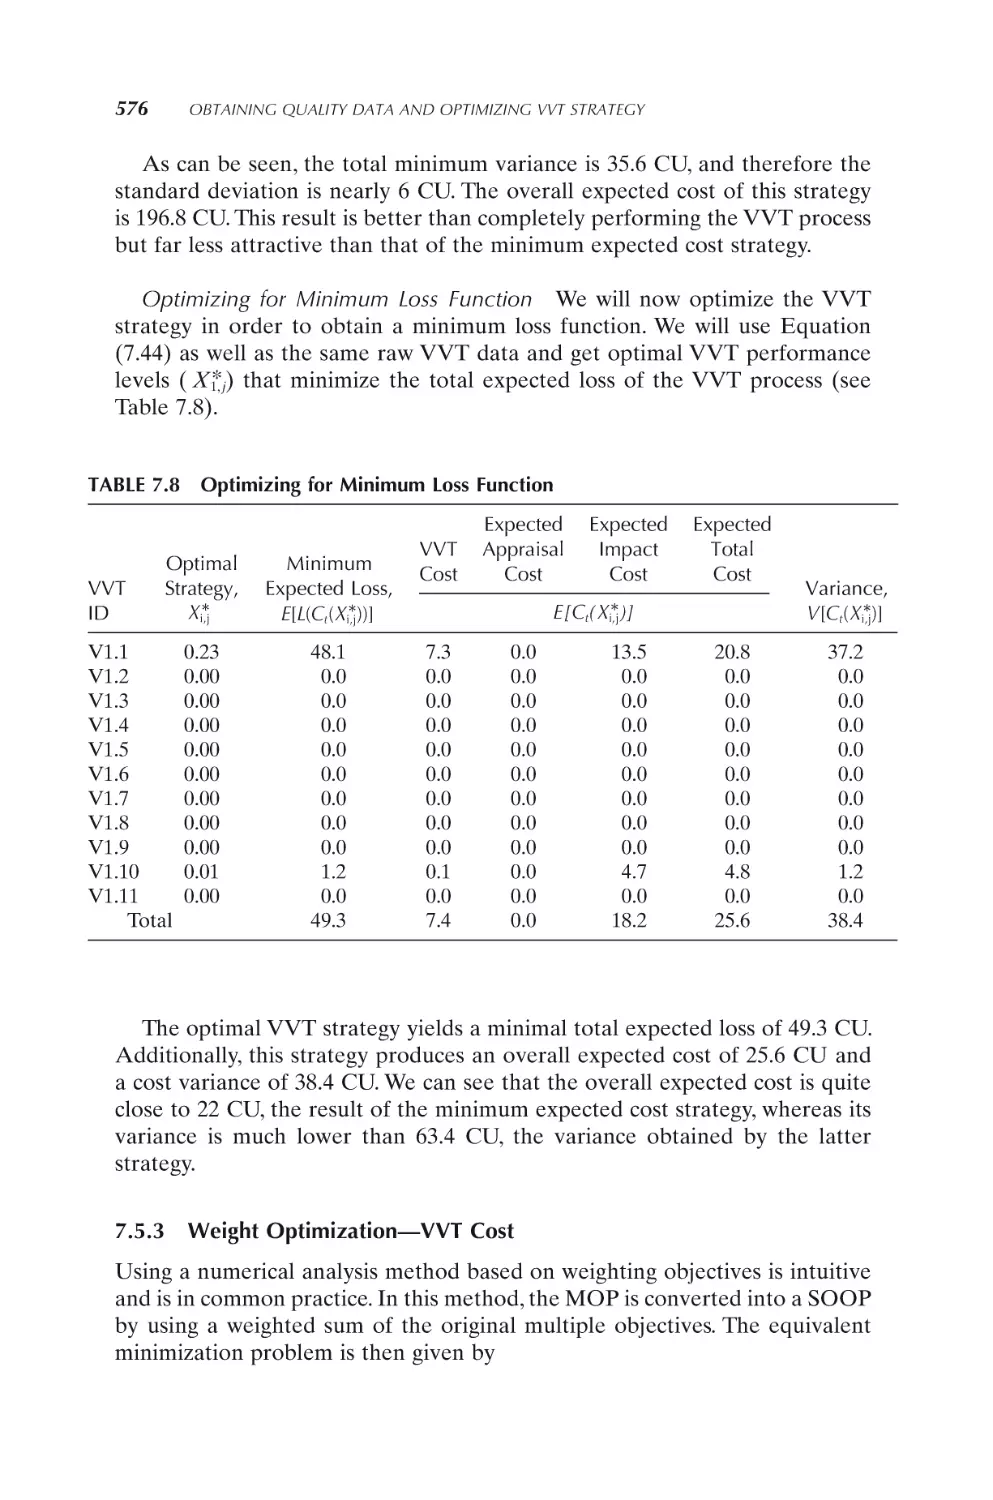 7.5.3 Weight Optimization—VVT Cost